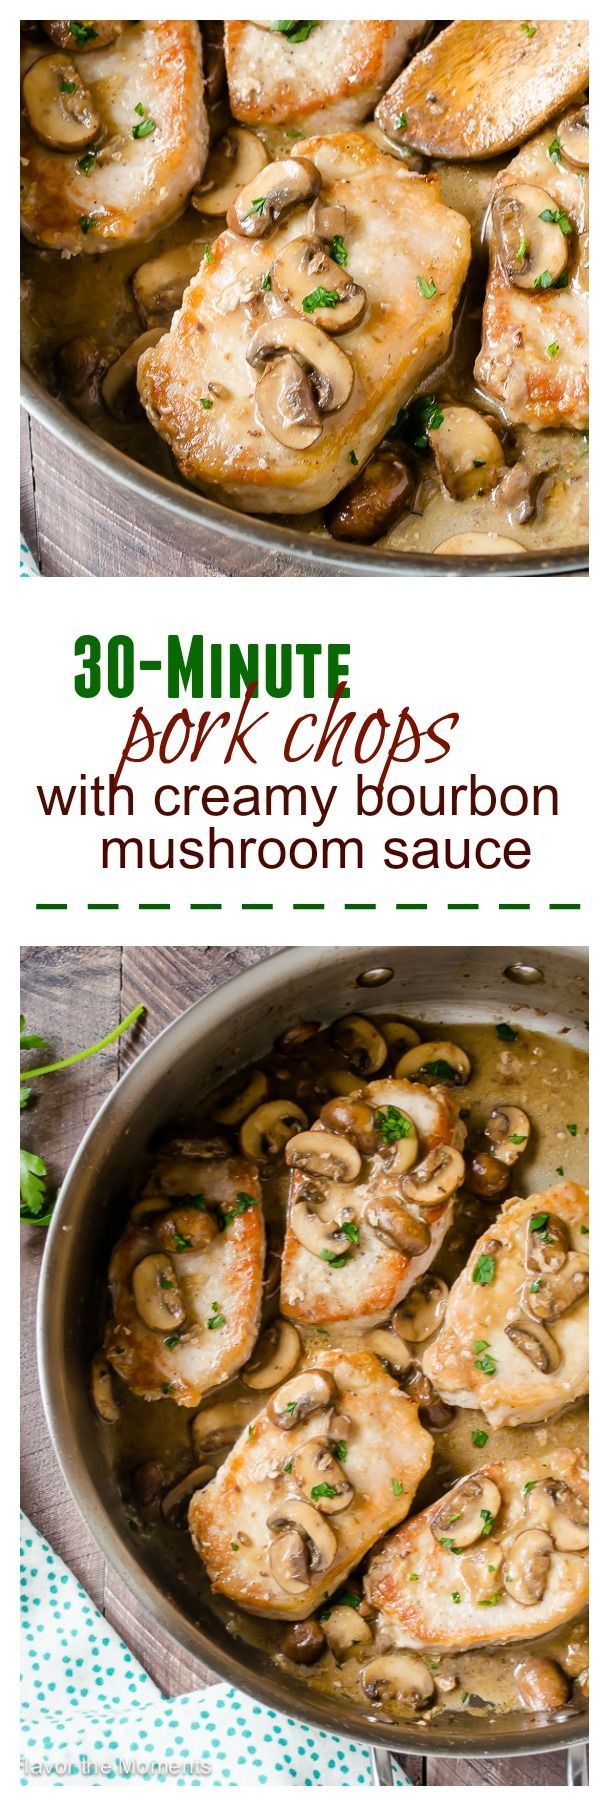 30 Minute Pork Chops with Creamy Bourbon Mushroom Sauce | flavorthemoments.com